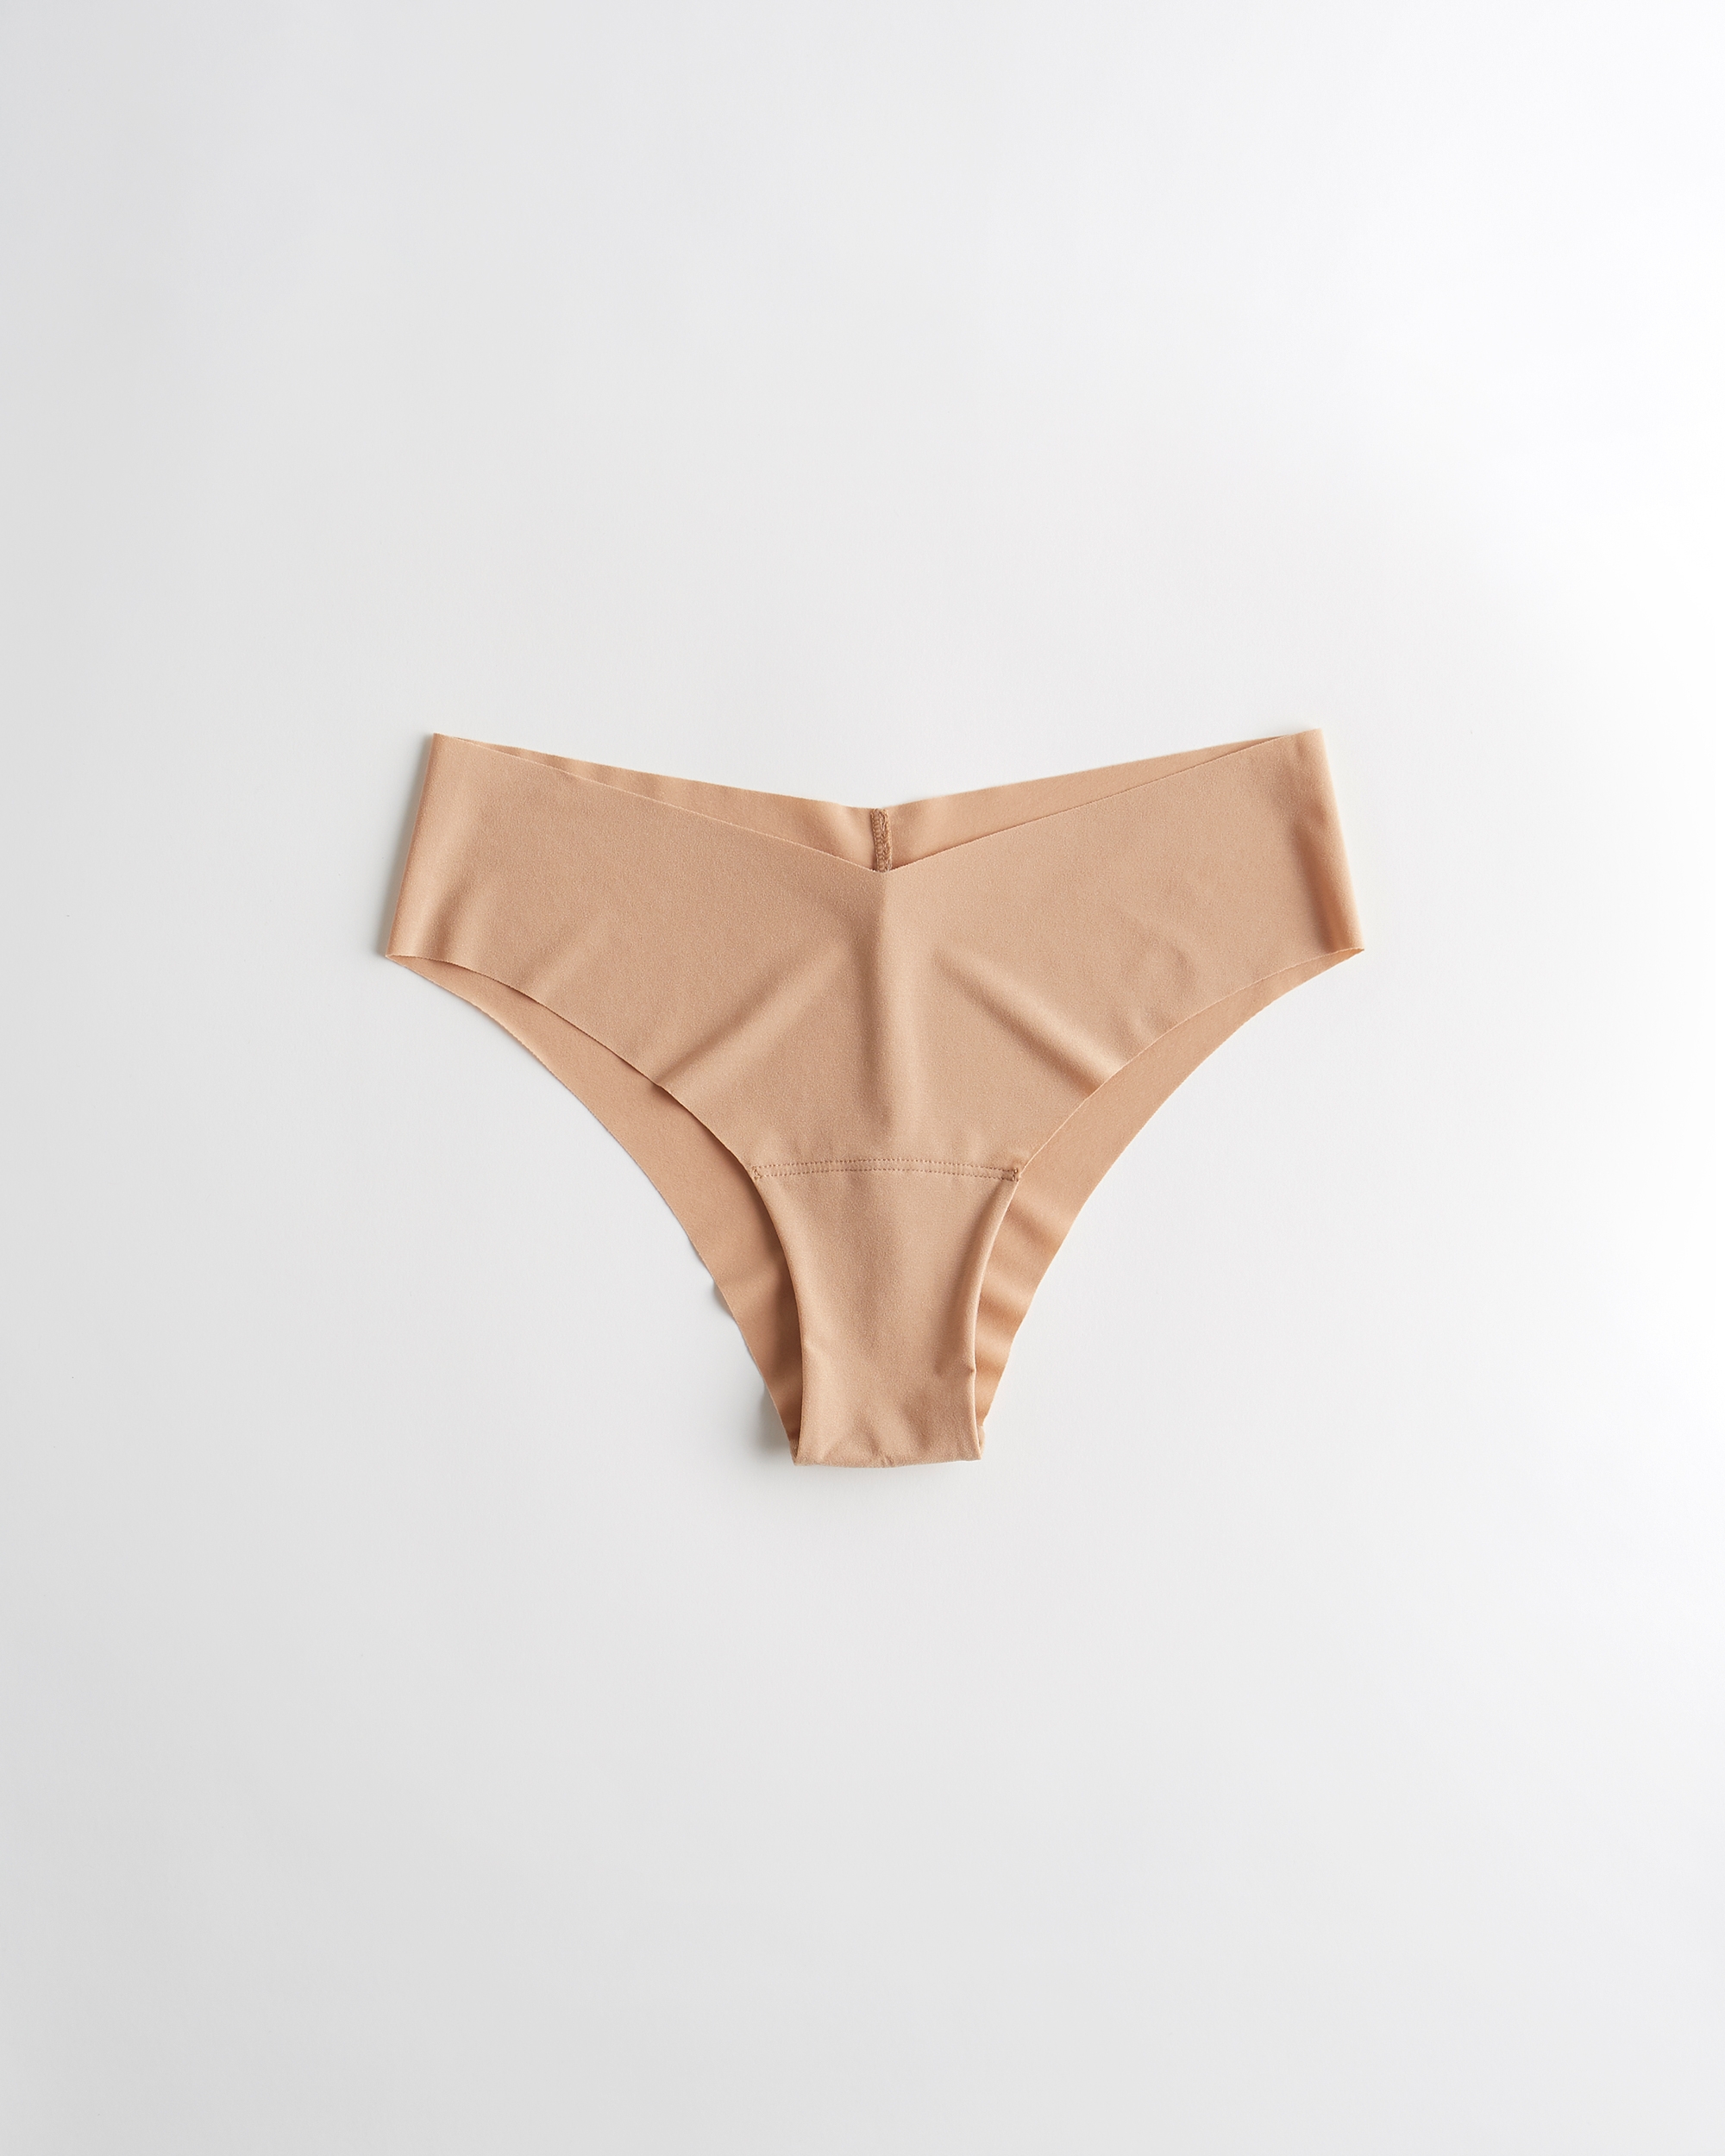 Gilly Hicks No-Show Cheeky Underwear